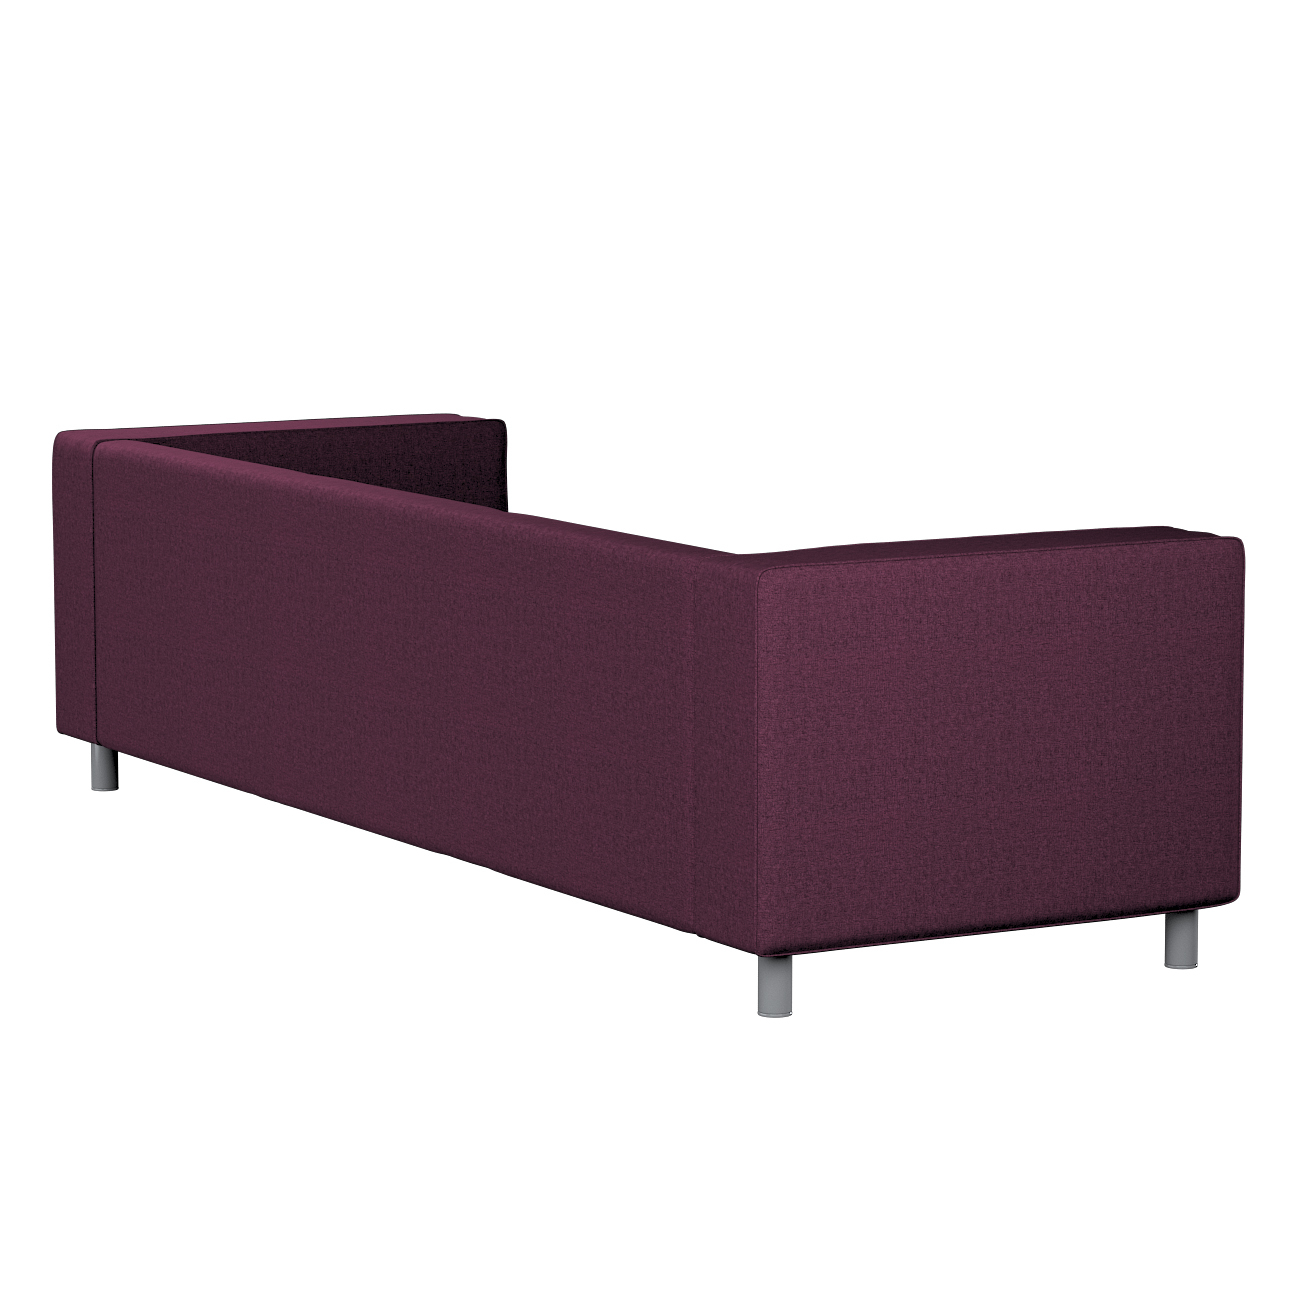 Bezug für Klippan 4-Sitzer Sofa, pflaumenviolett, Bezug für Klippan 4-Sitze günstig online kaufen